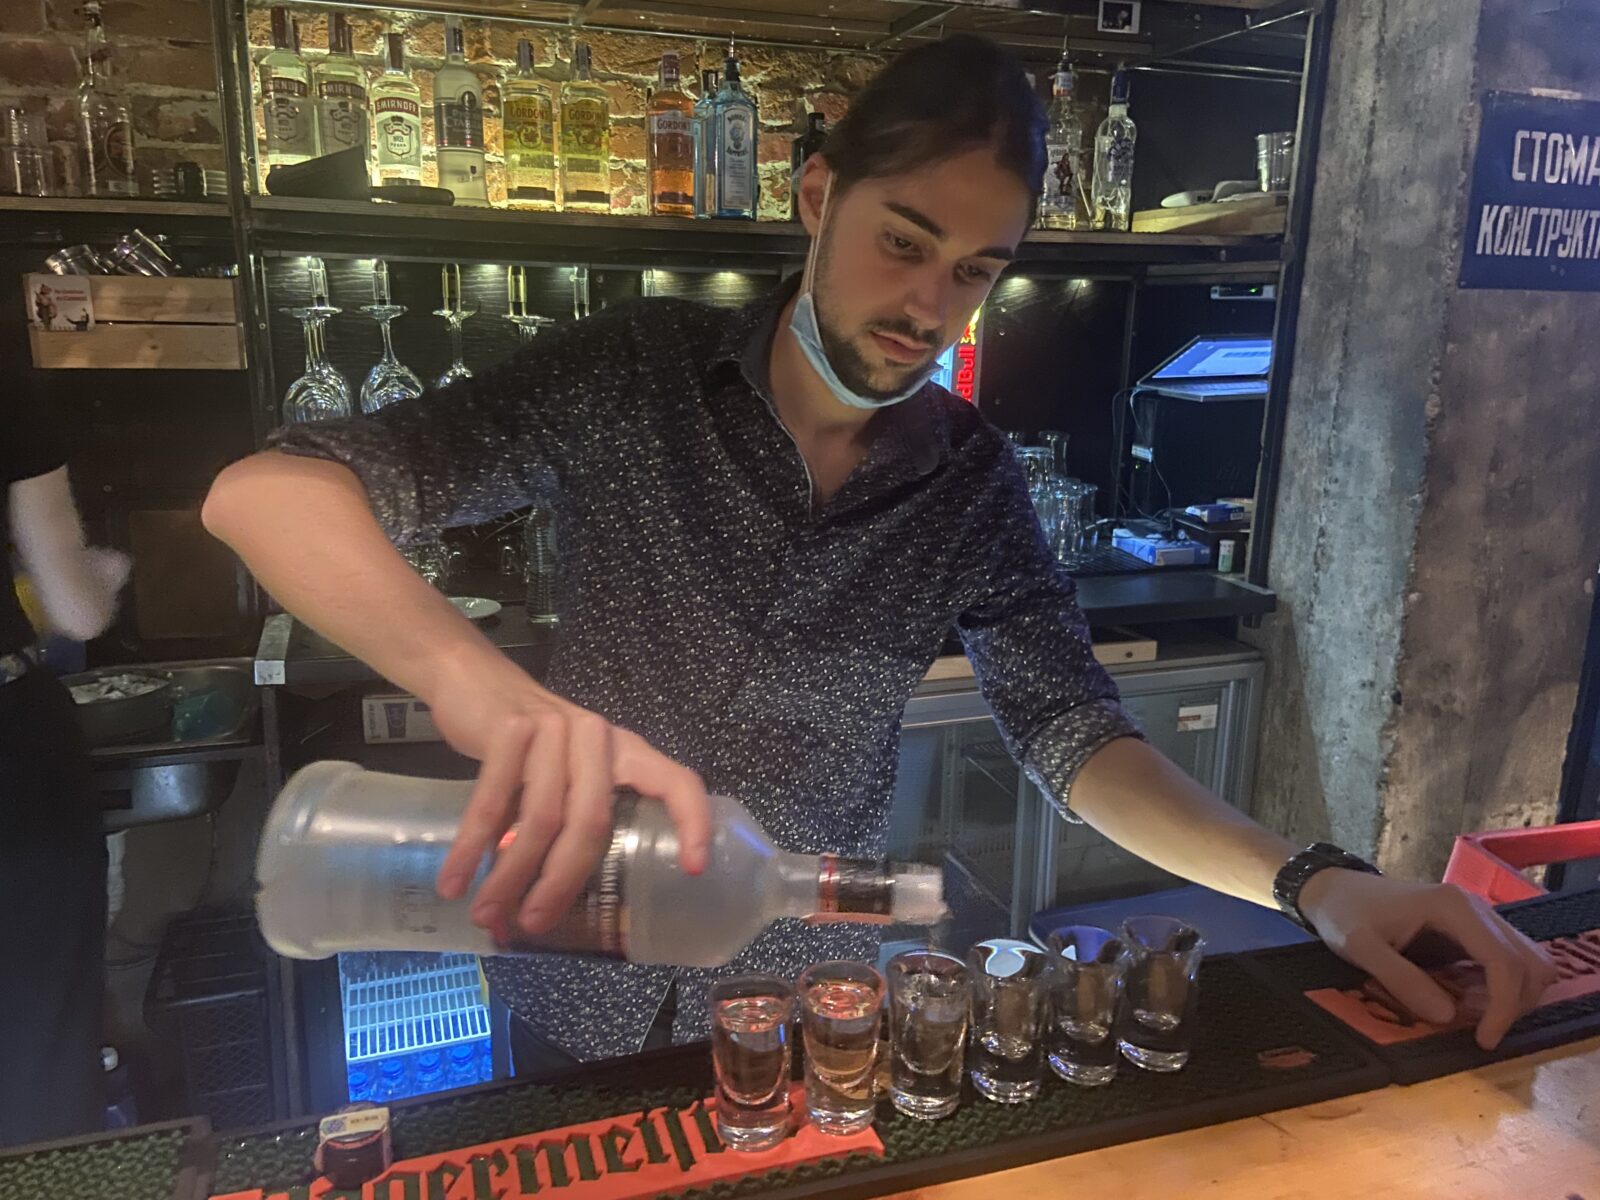 A bartender prepares our shots at Stroeja.